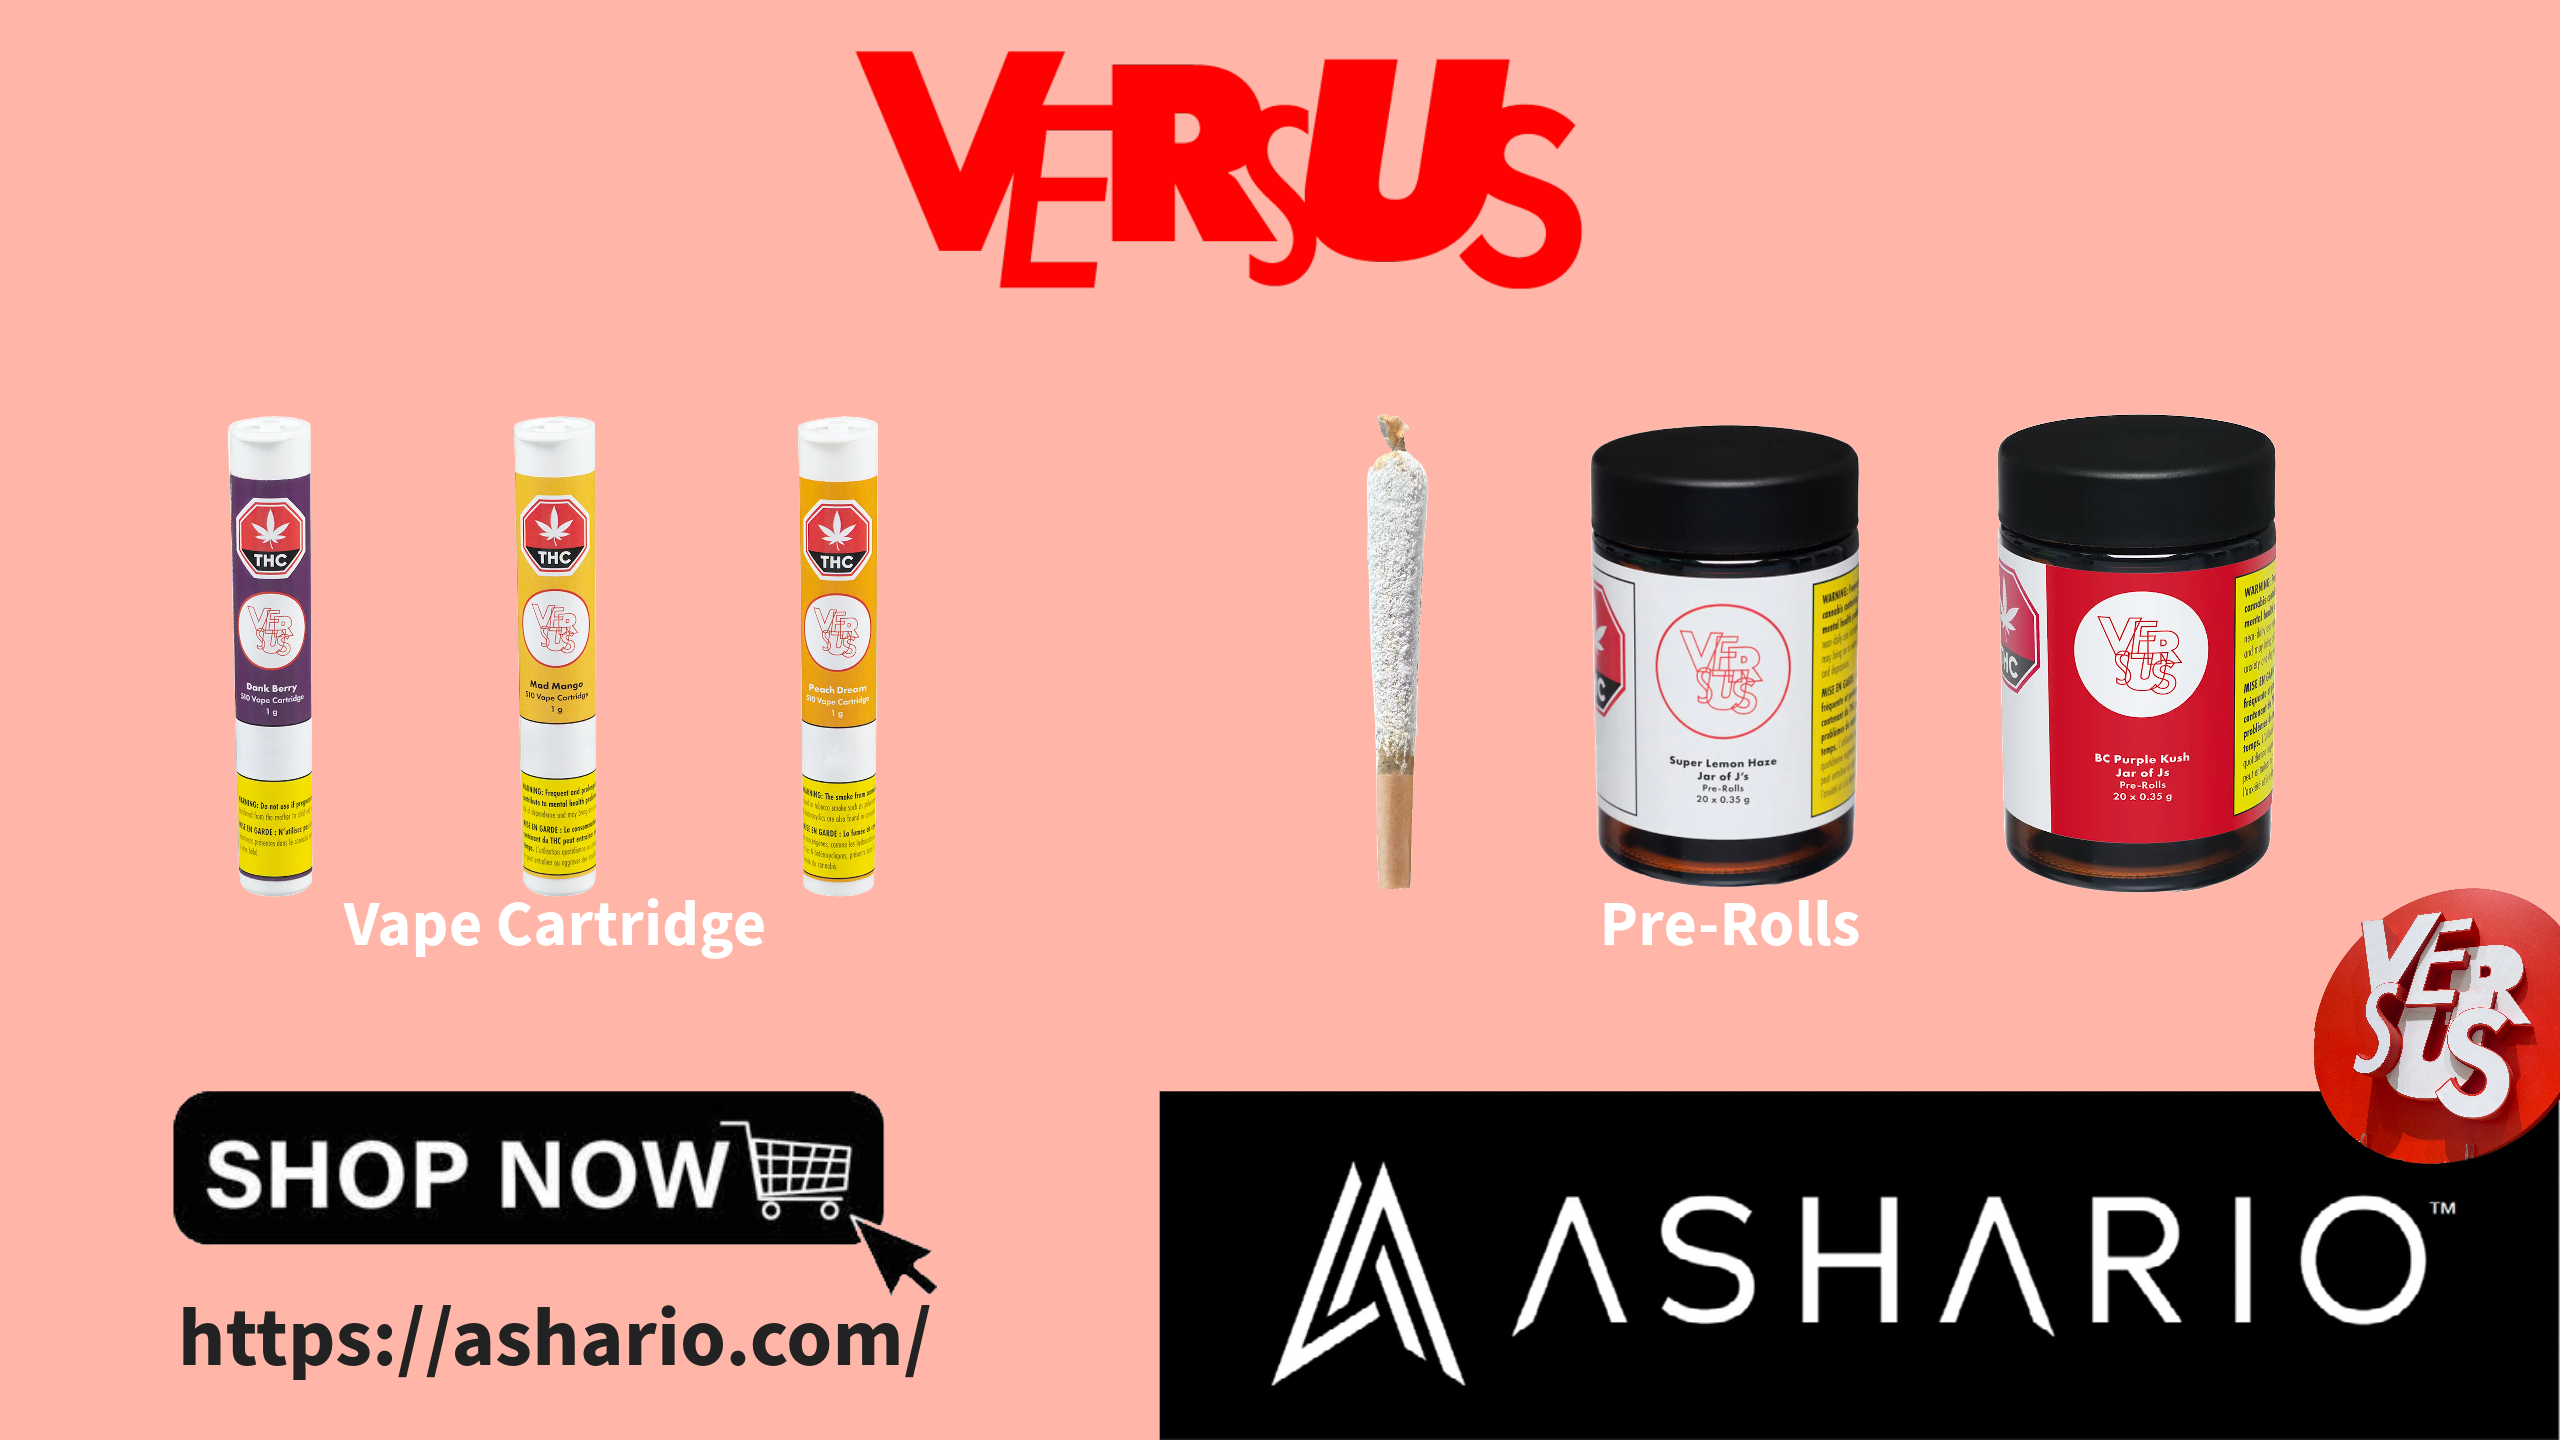 Ashario Cannabis Brand Spotlight: Versus/Verse